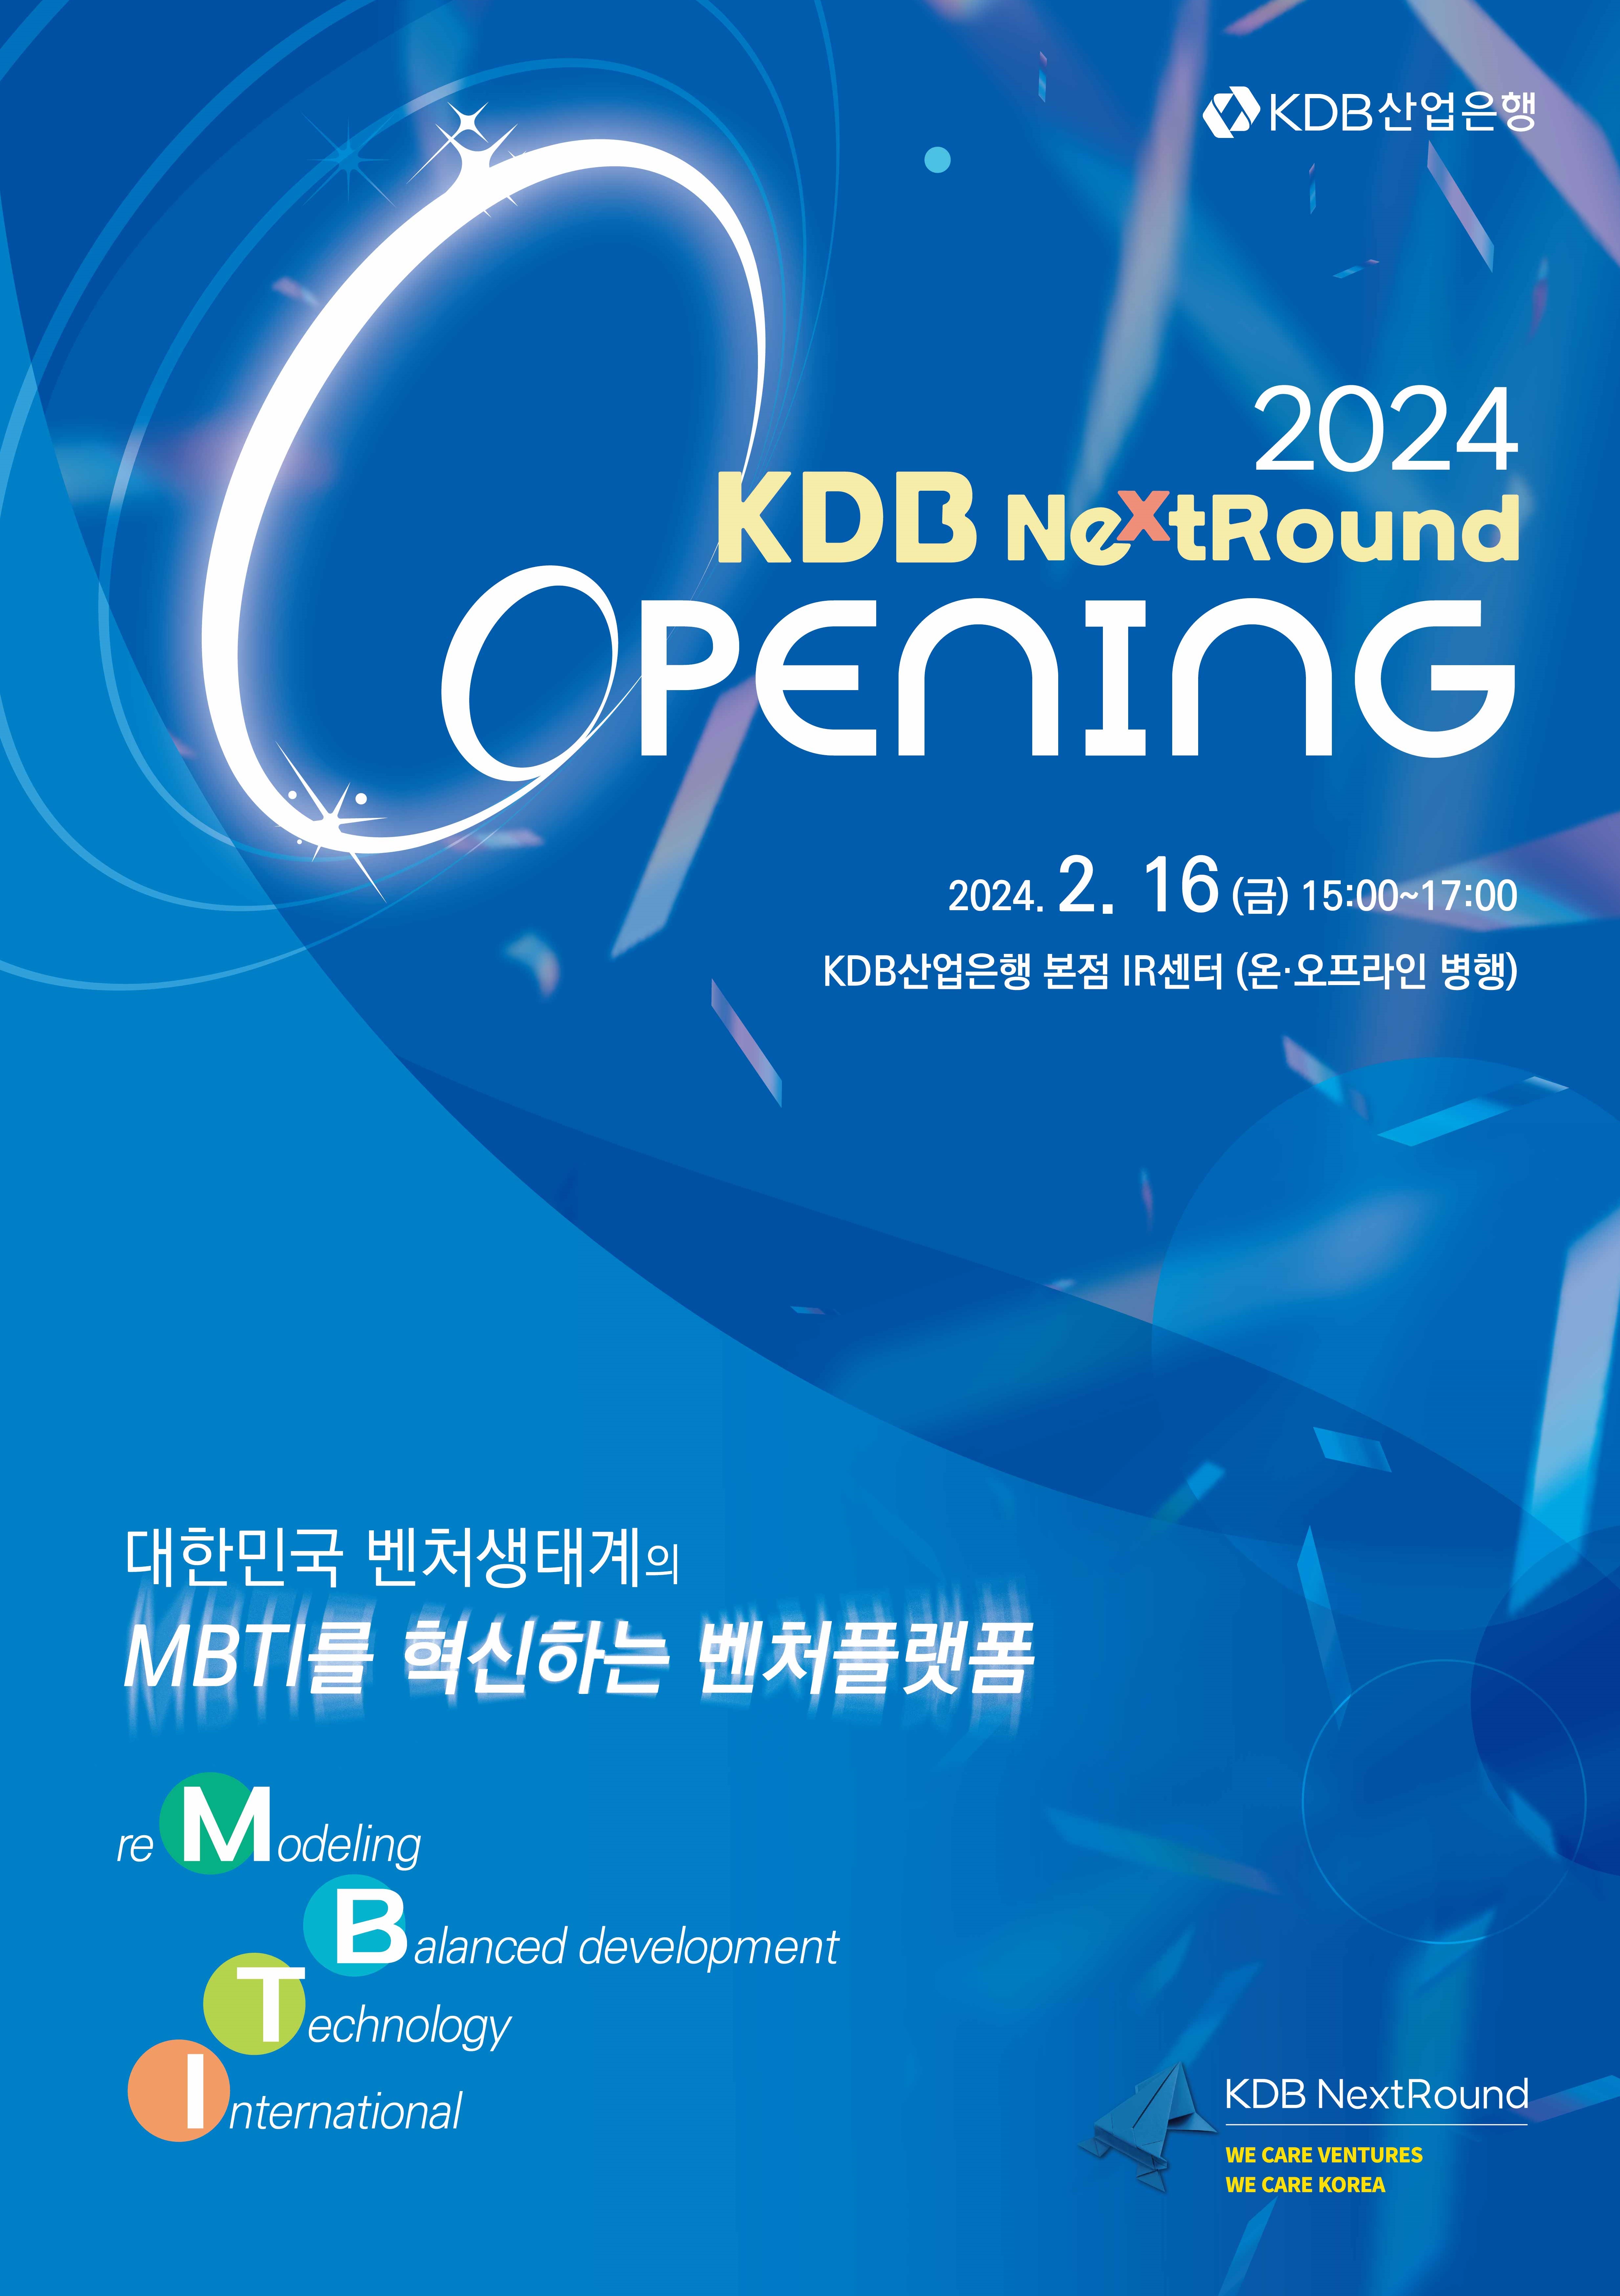 [R 720] 2024 KDB NextRound Opening / 2.16(금) 3PM